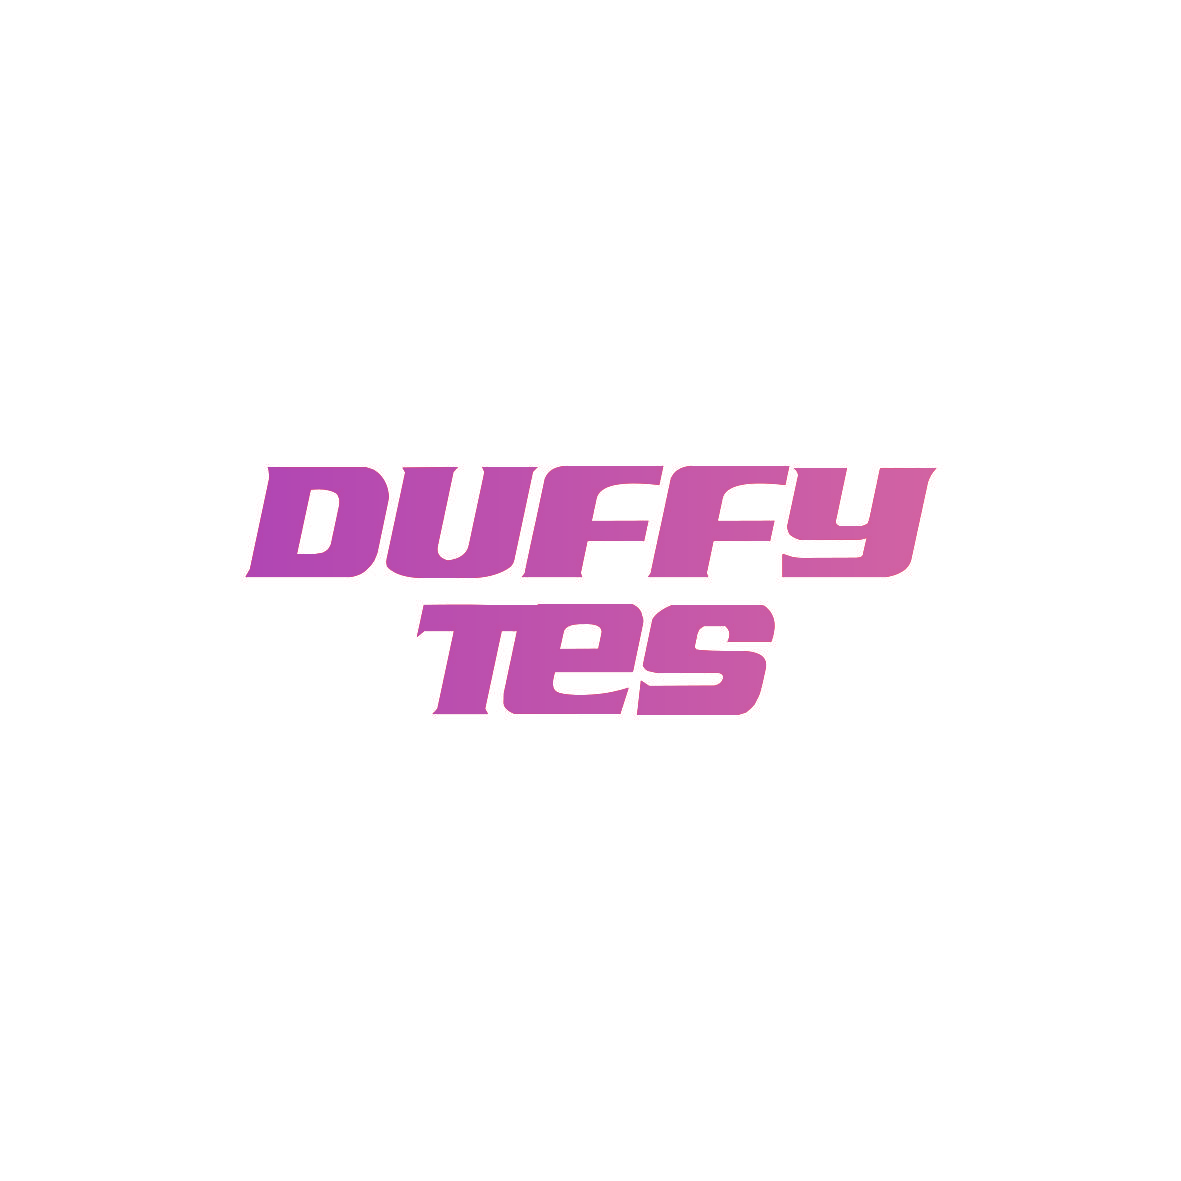 DUFFY TES